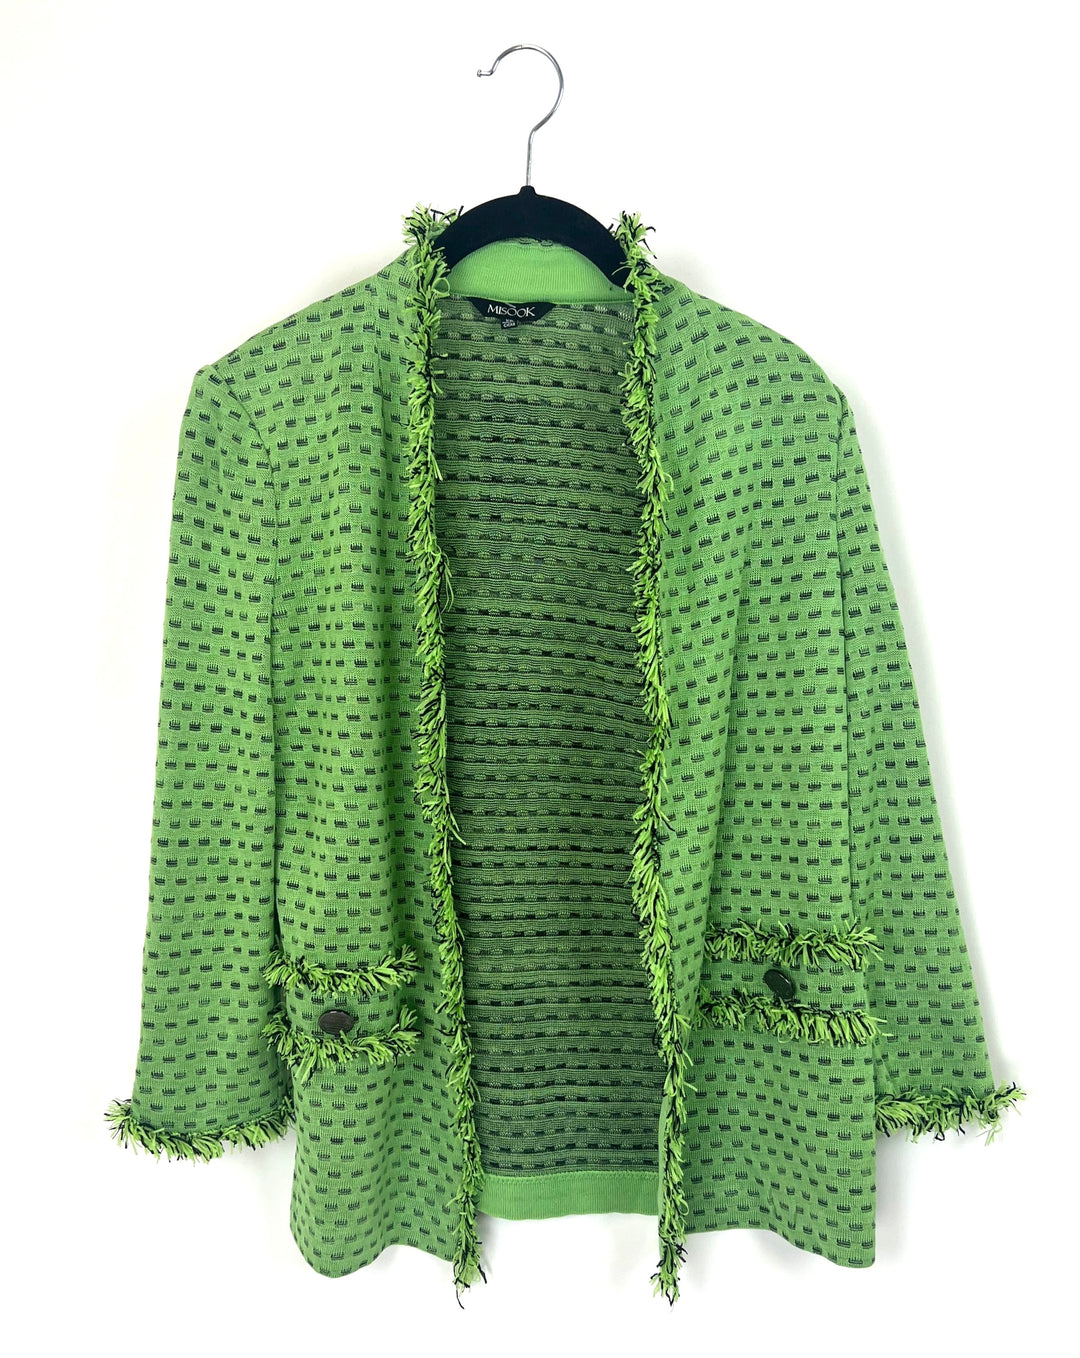 Green Frayed Cardigan - Size 2-4